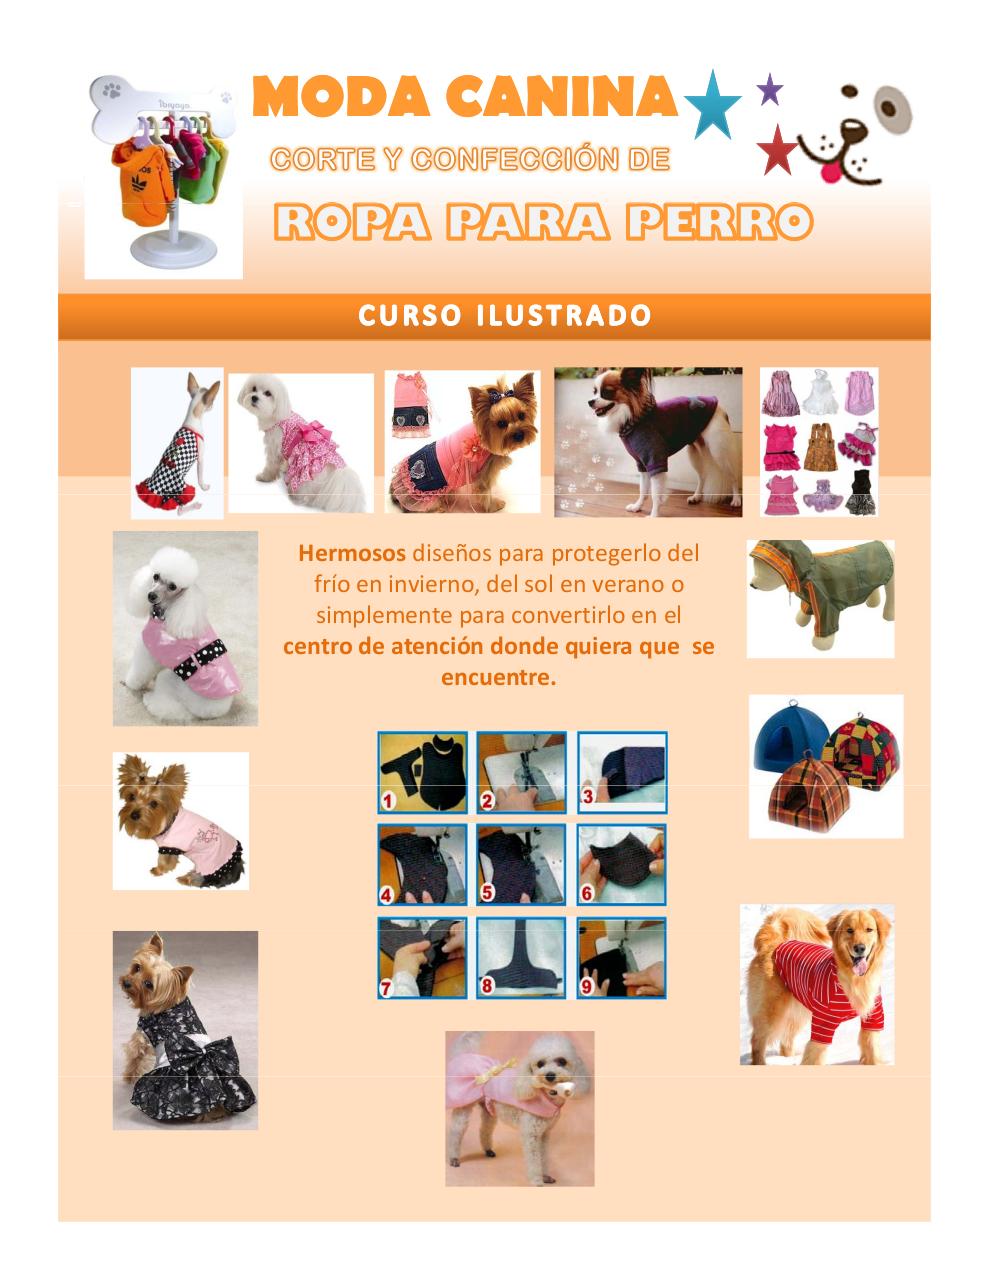 ROPA PARA PERRO  por Personal - Manual de moda canina 1 pdf -  Caja PDF